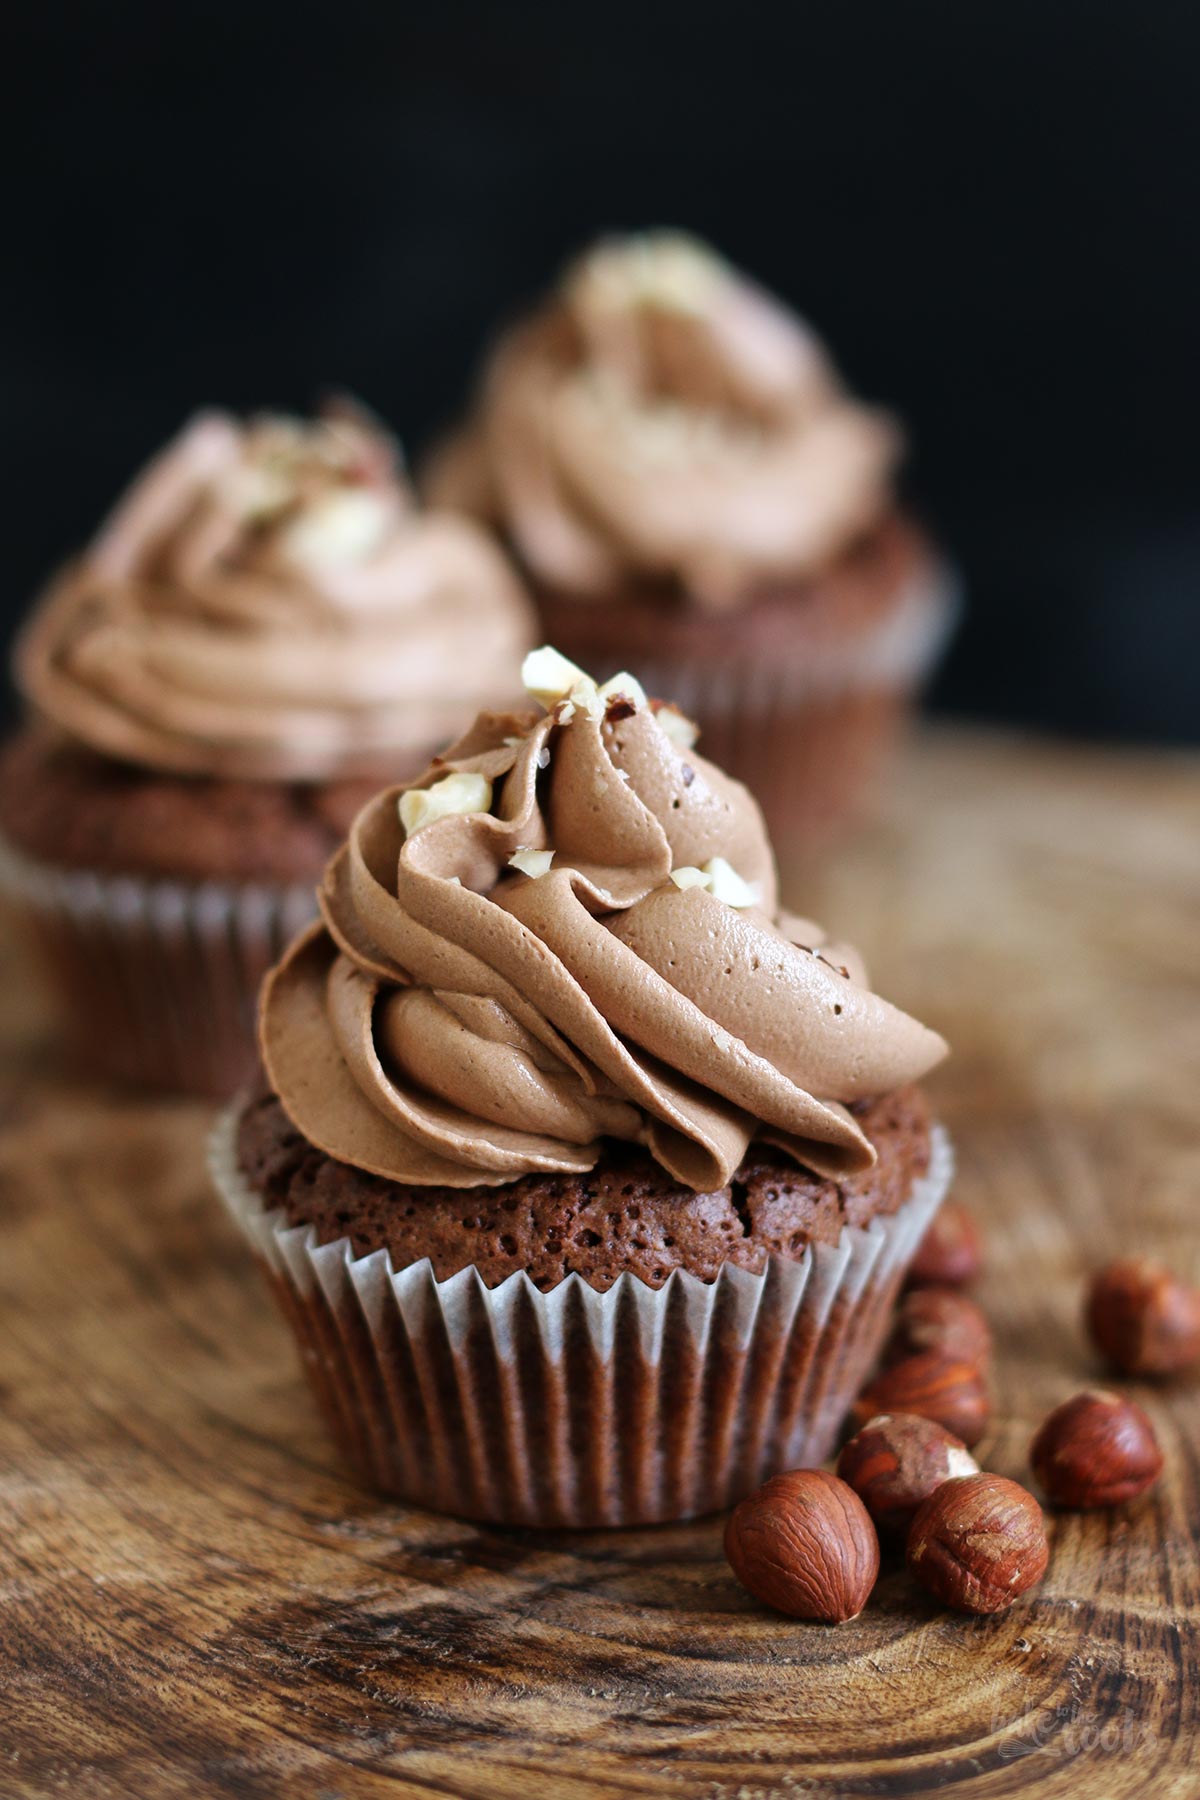 Chocolate "Totally Nuts" Hazelnut Cupcakes